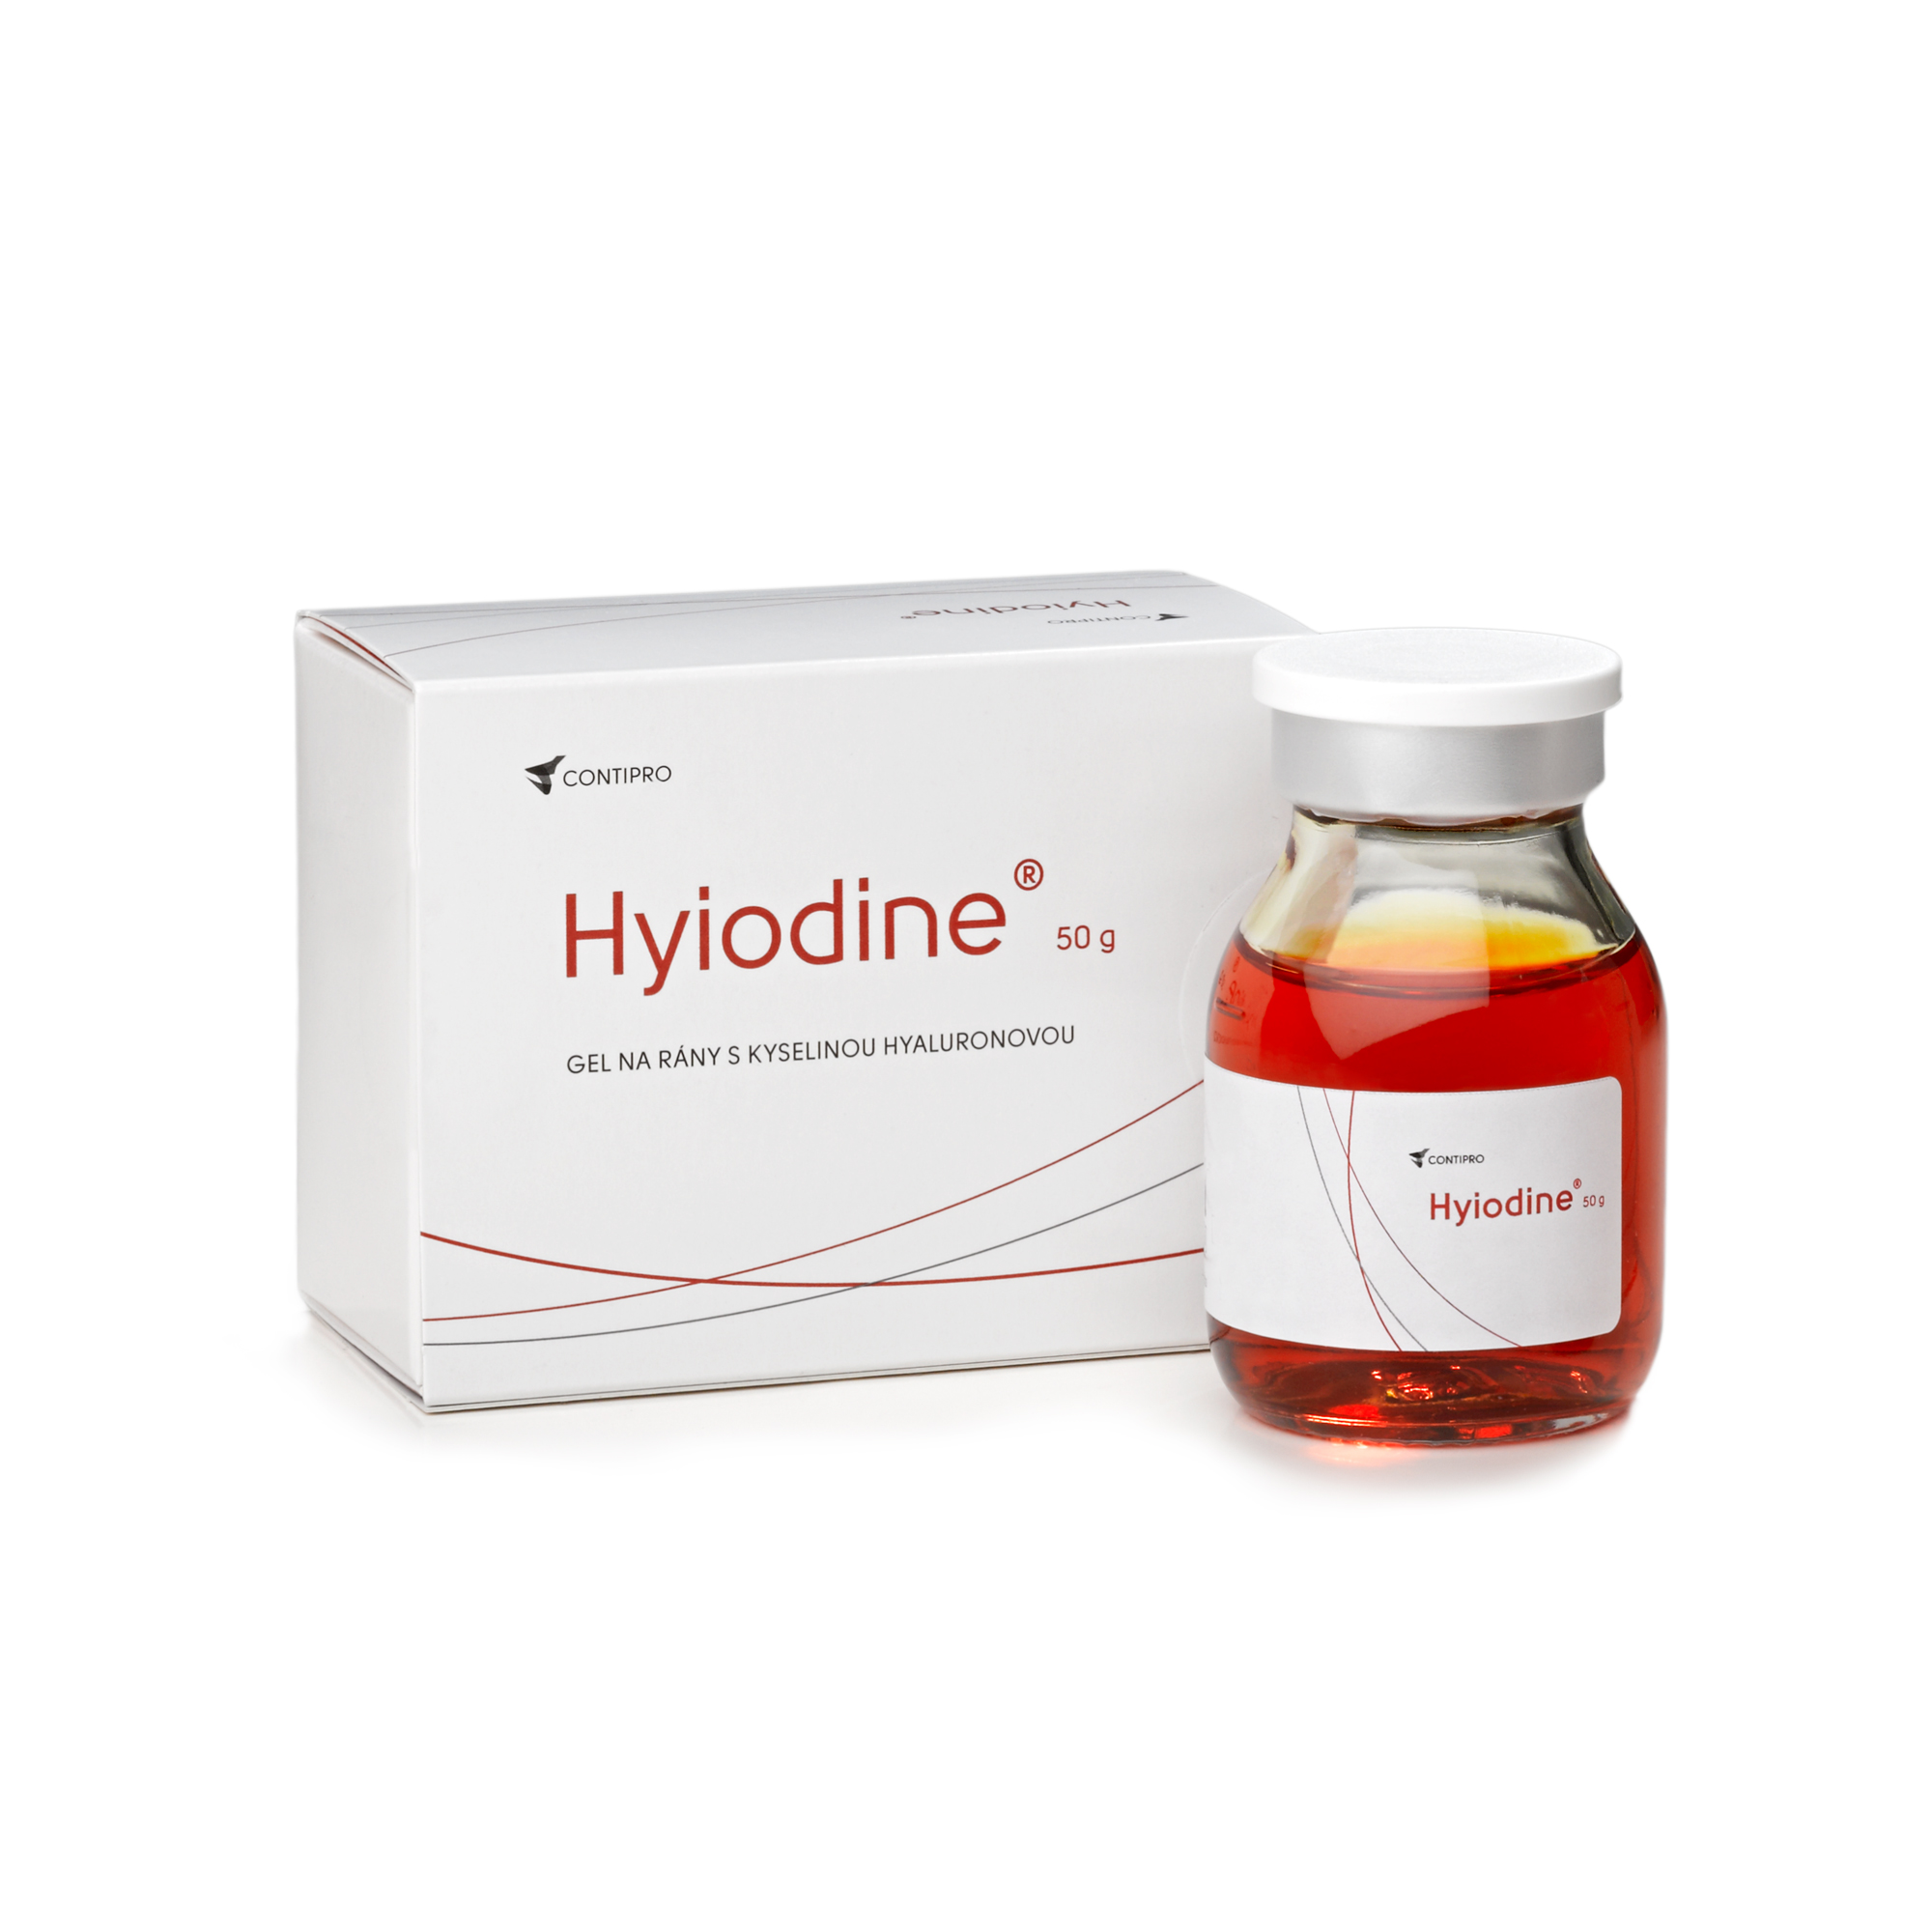 Hyiodine - Wound healing gel